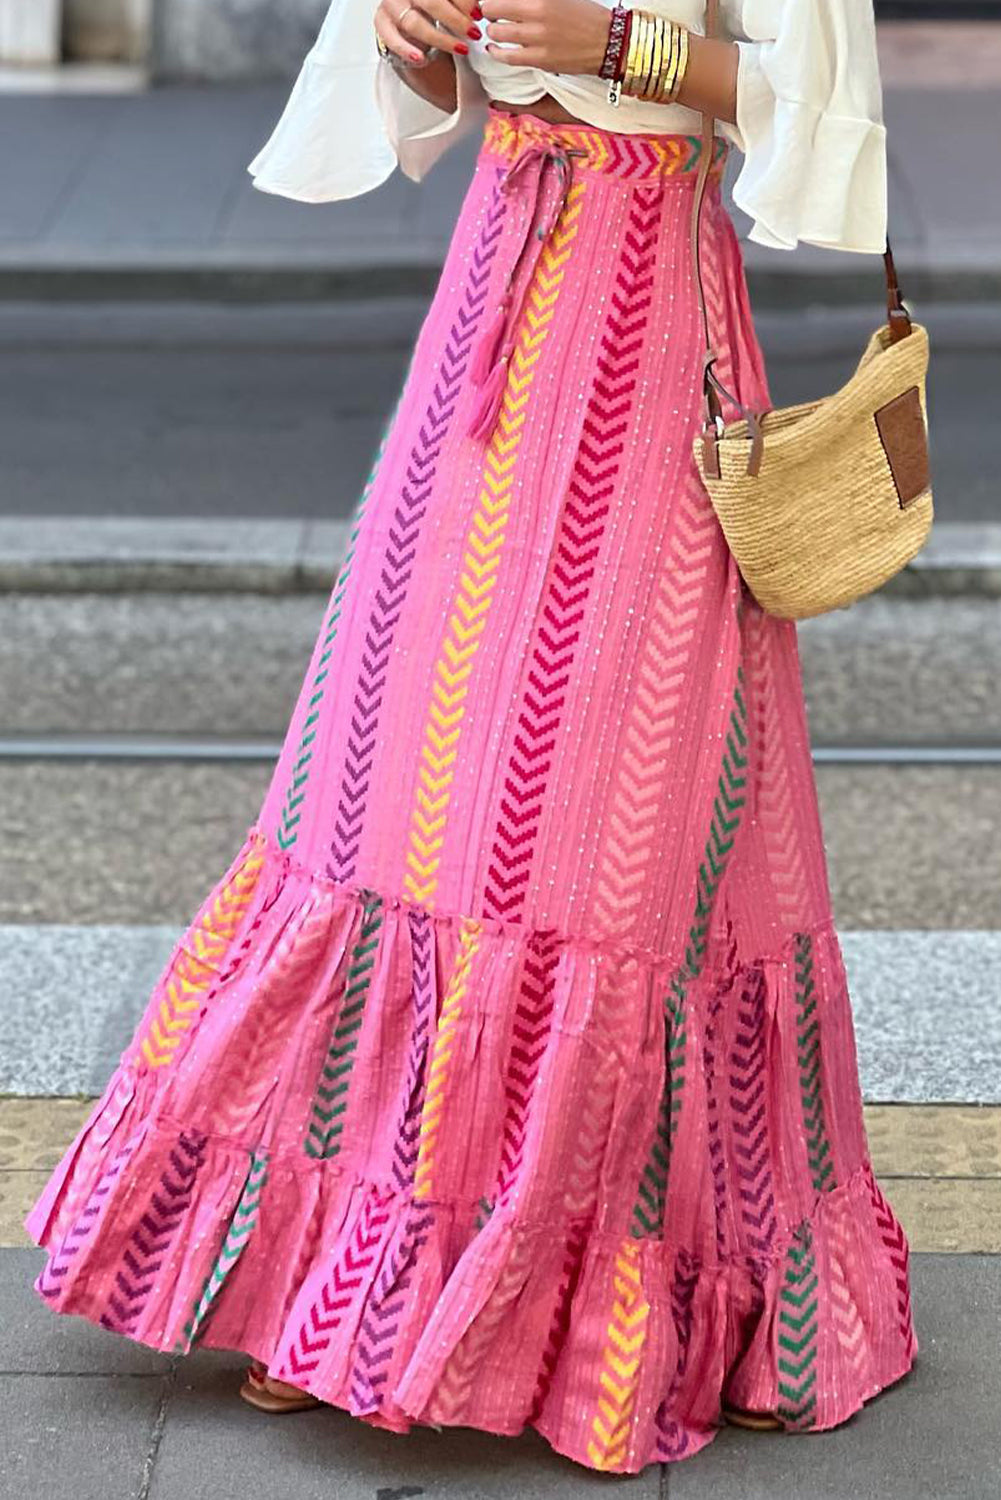 TEEK - Carnation Pink Drawstring High Waist Skirt SKIRT TEEK Trend S  